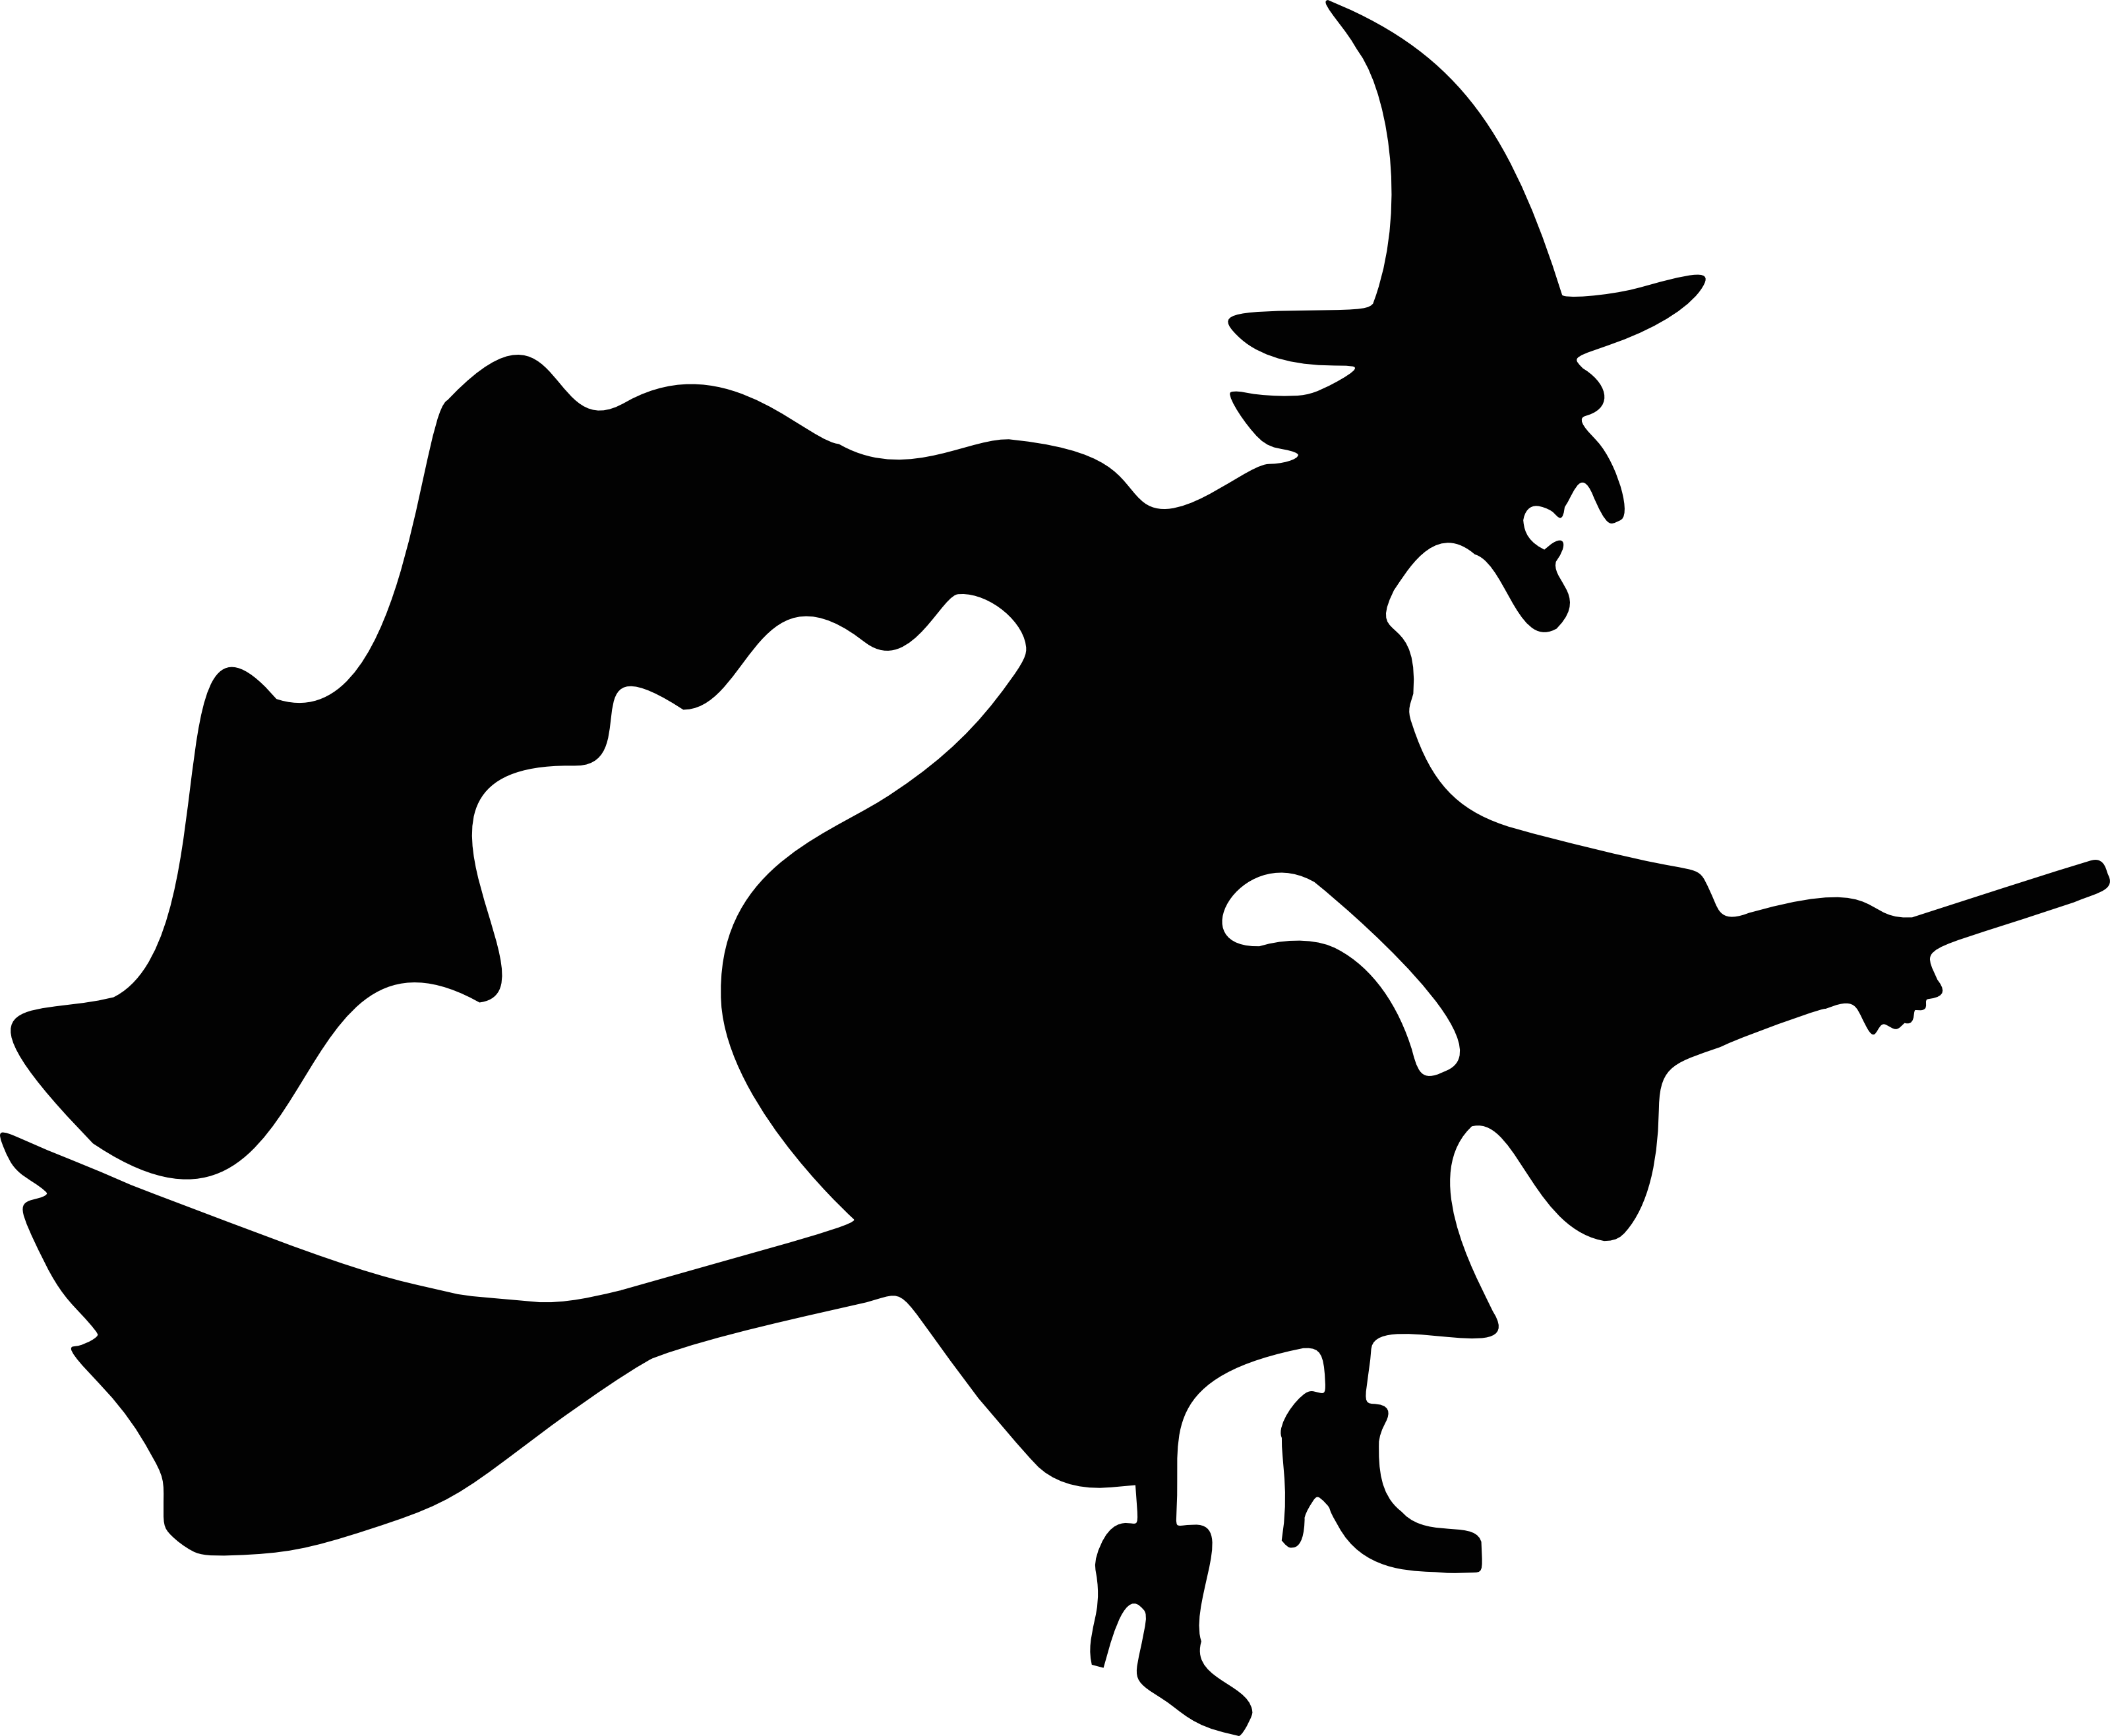 Halloween silhouette illustration PNG télécharger limage